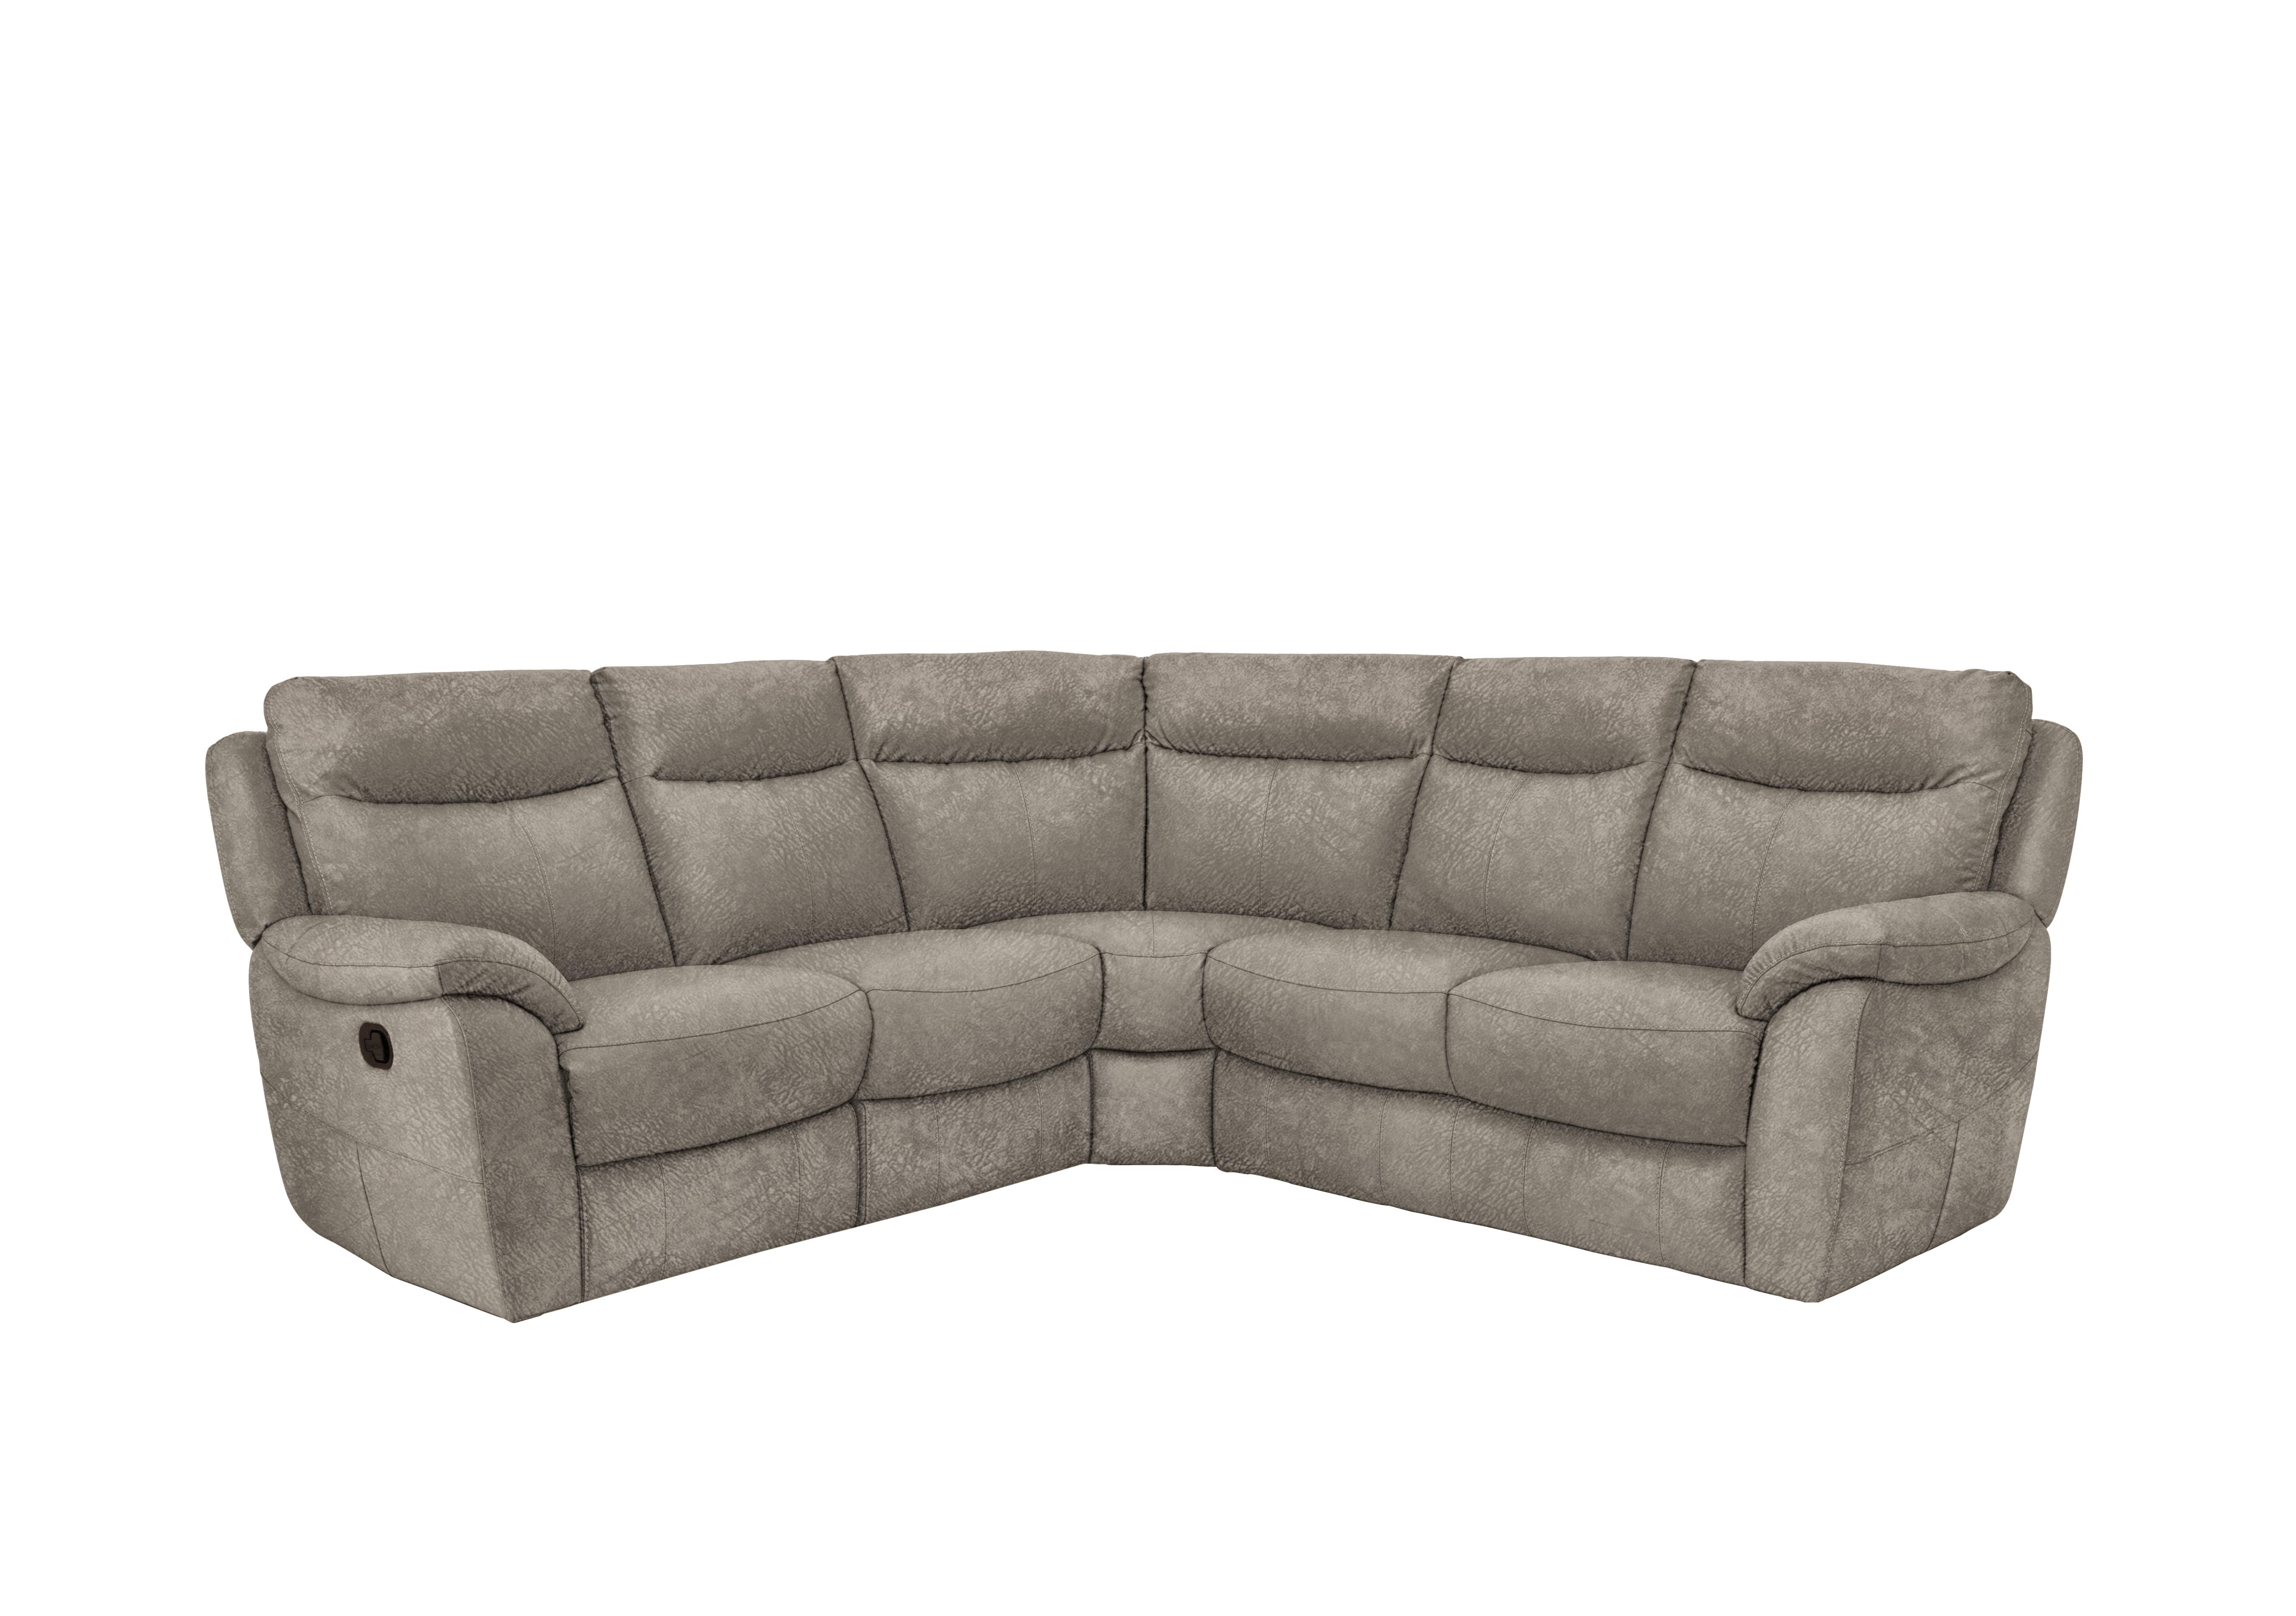 Snug Fabric Corner Sofa in Bfa-Bnn-R29 Fv1 Mink on Furniture Village